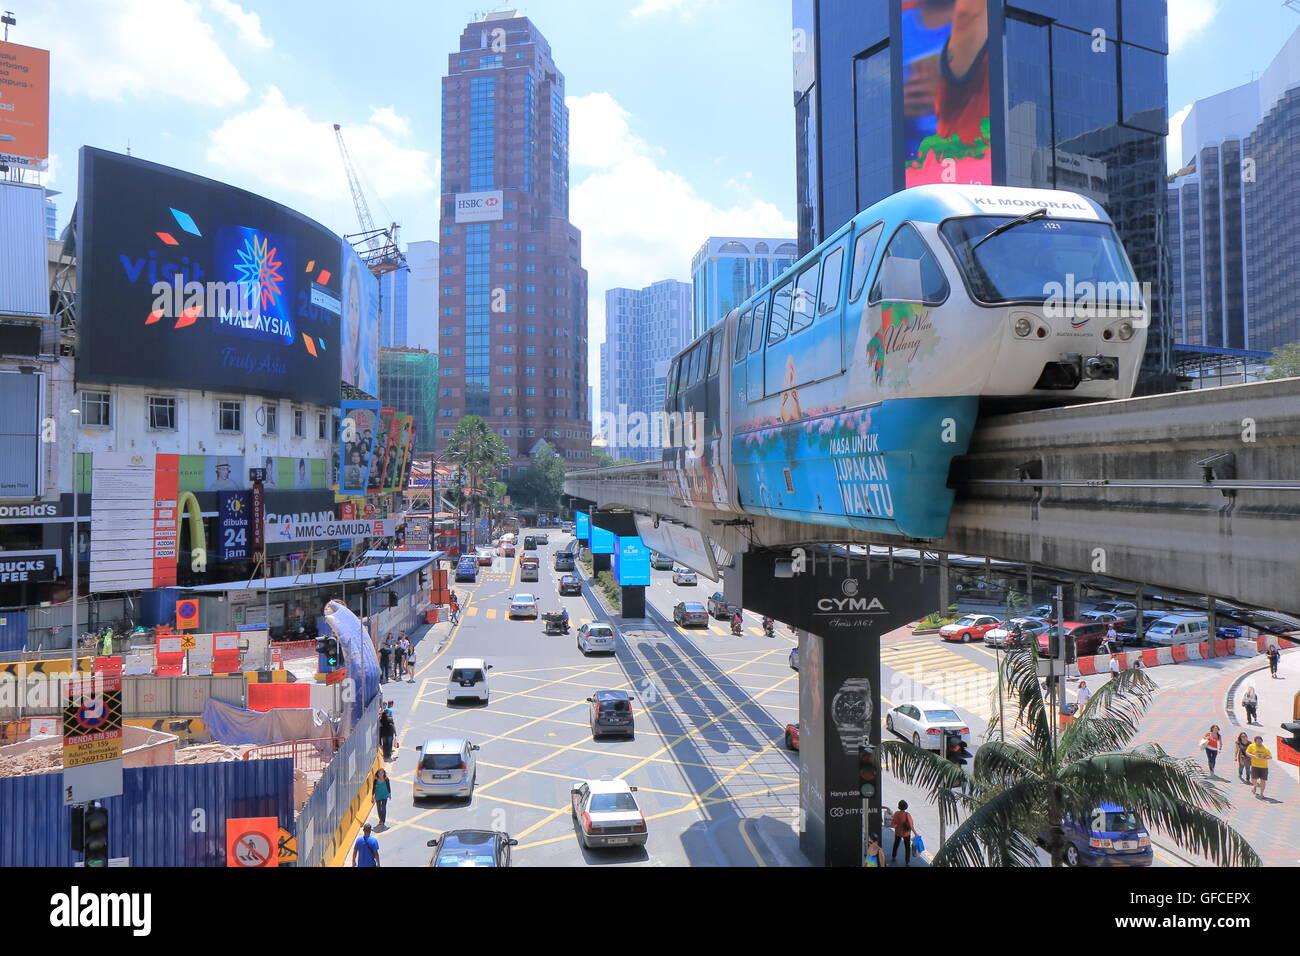 Bintang Walk in Bukit Bintang e monorail a Kuala Lumpur in Malesia. Foto Stock